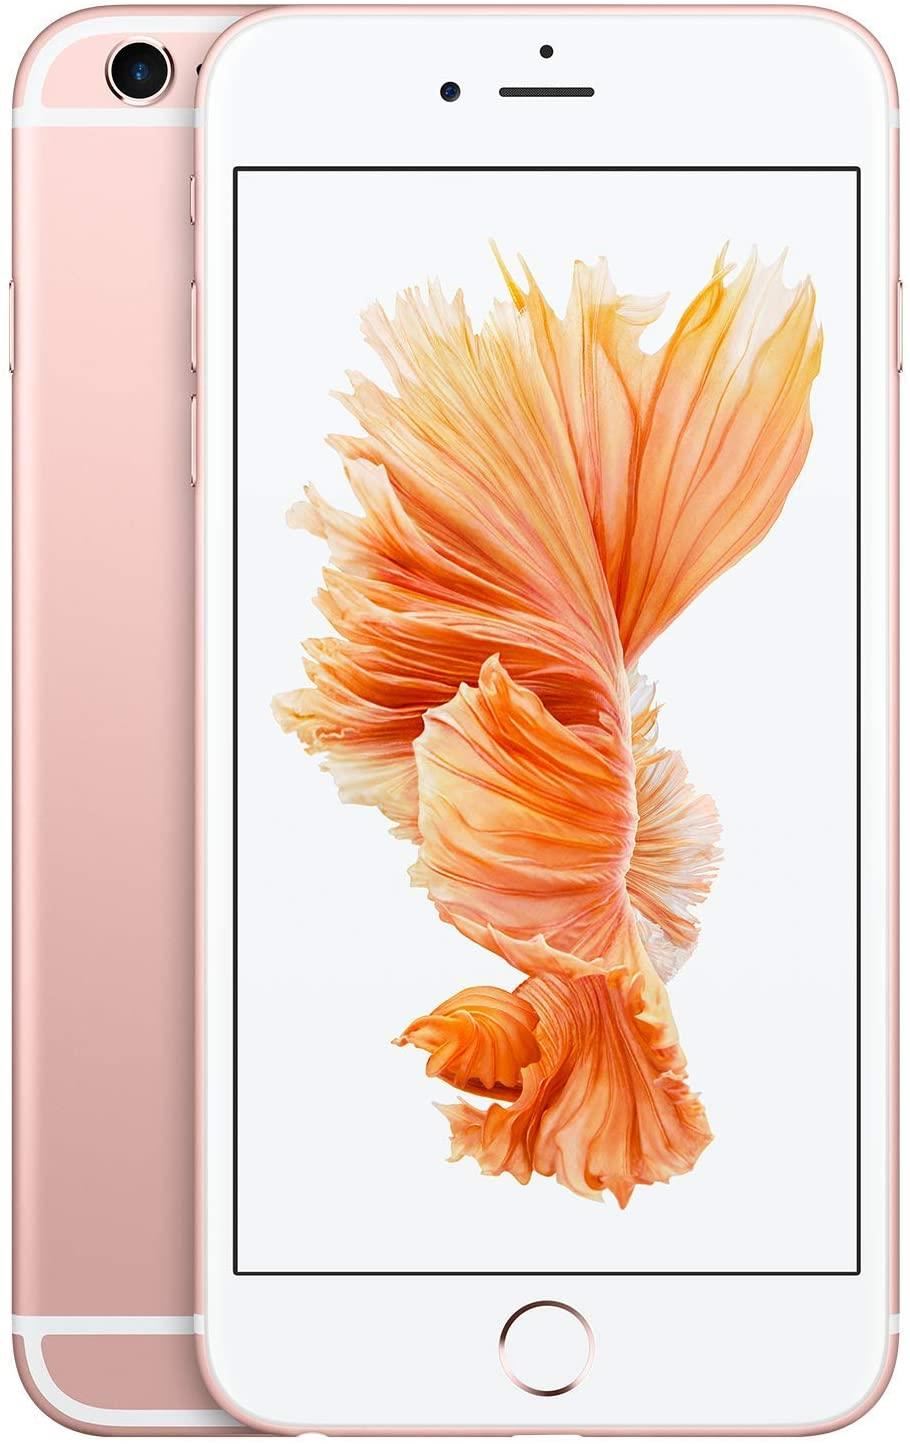 Apple iPhone 6S Plus 4G Smartphone Unlocked 16-32-64-128GB